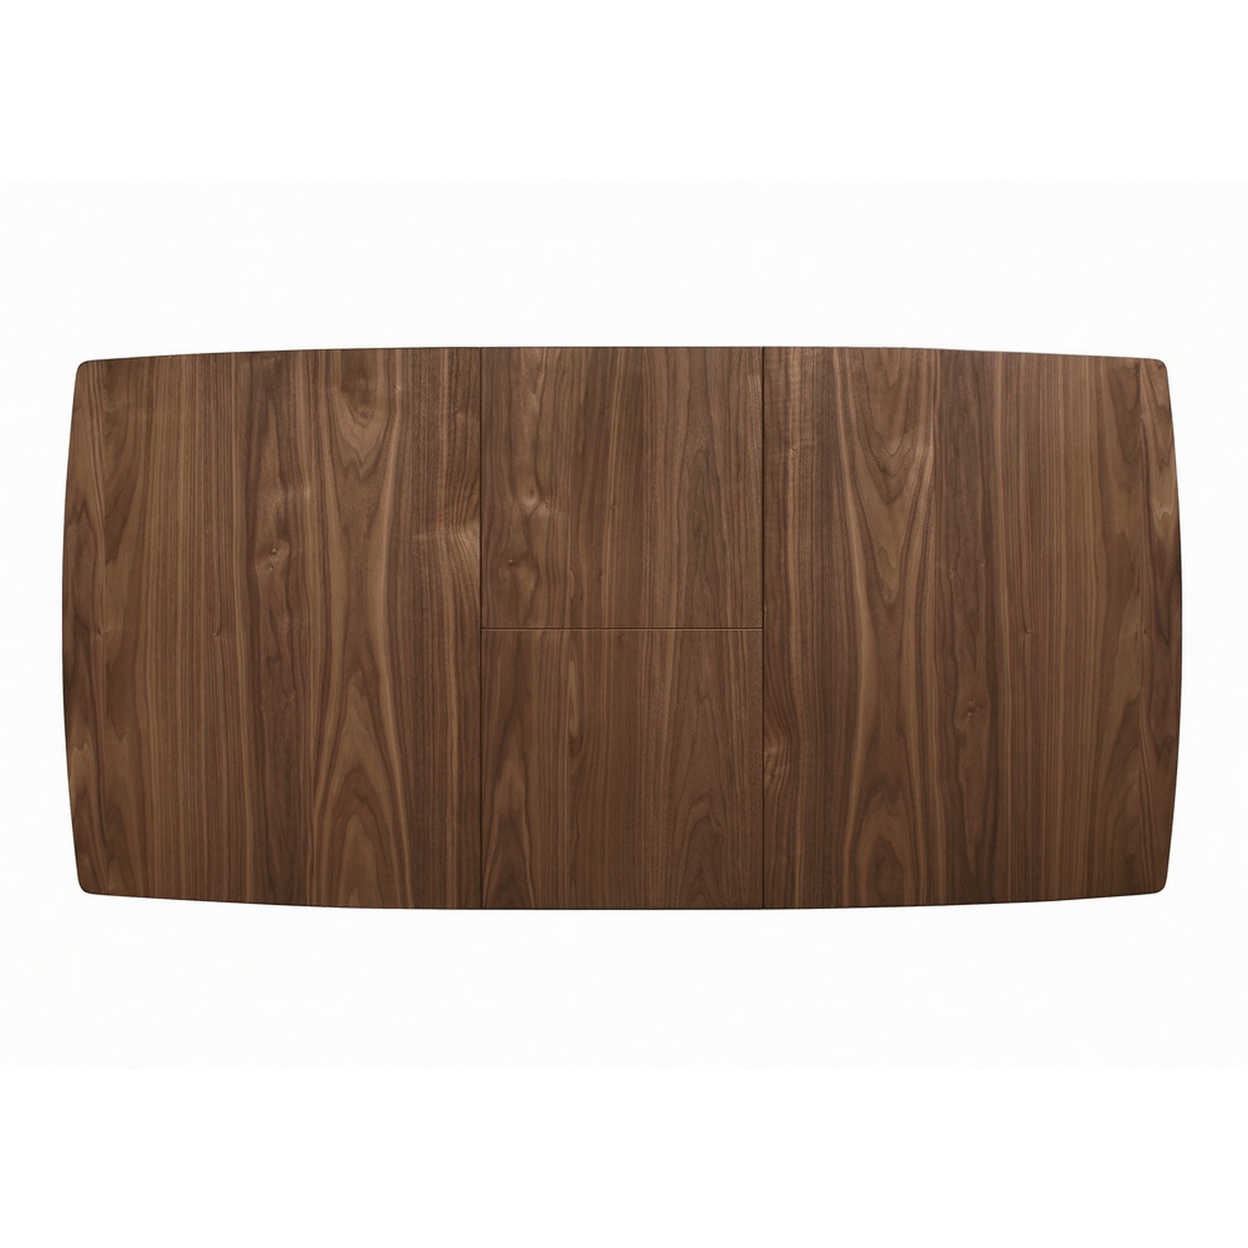 30 Inch Mid Century Modern Wooden Dining Table, Brown- Saltoro Sherpi